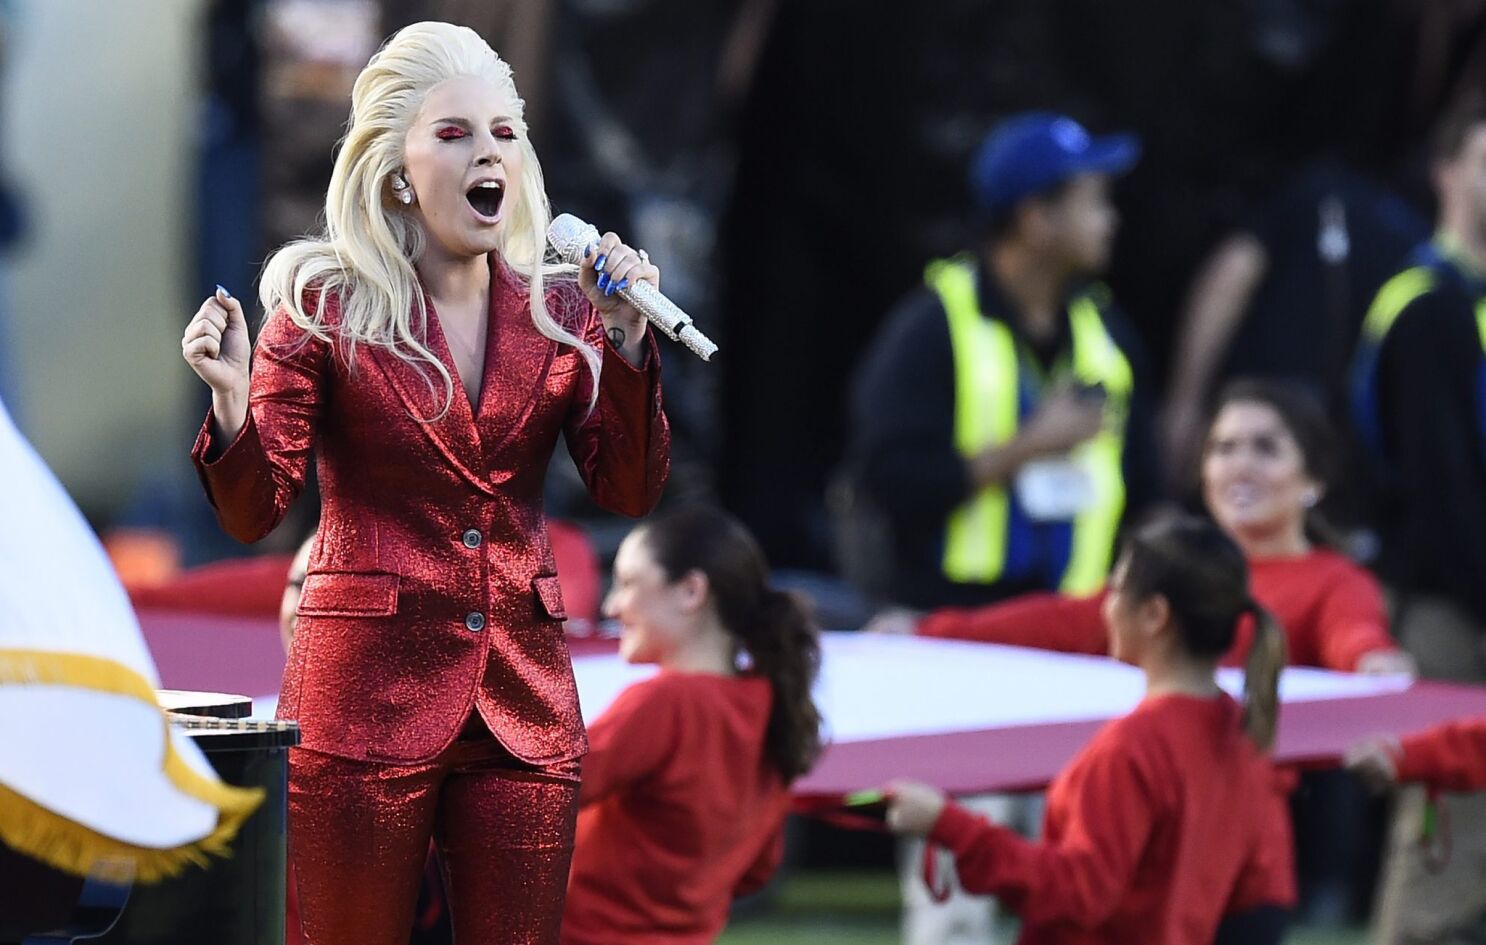 Lady Gaga to headline 2017 Super Bowl halftime show - Los Angeles Times